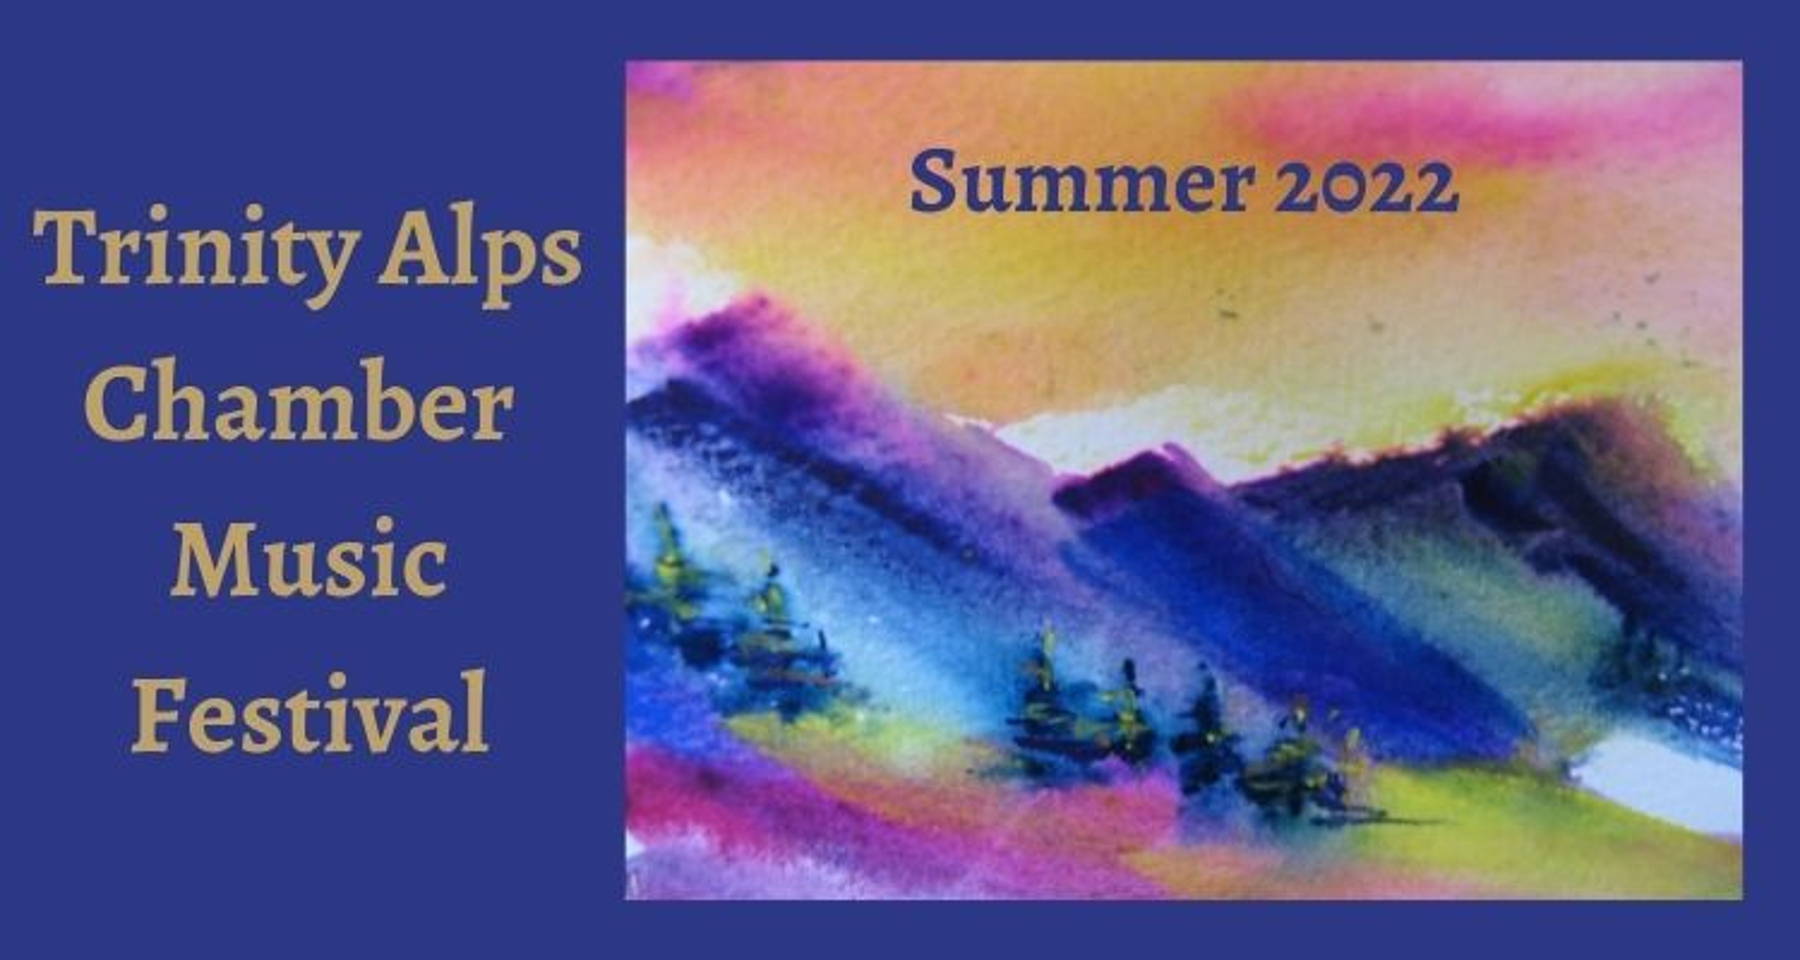 Trinity Alps Chamber Music Festival: Centuries of Sound